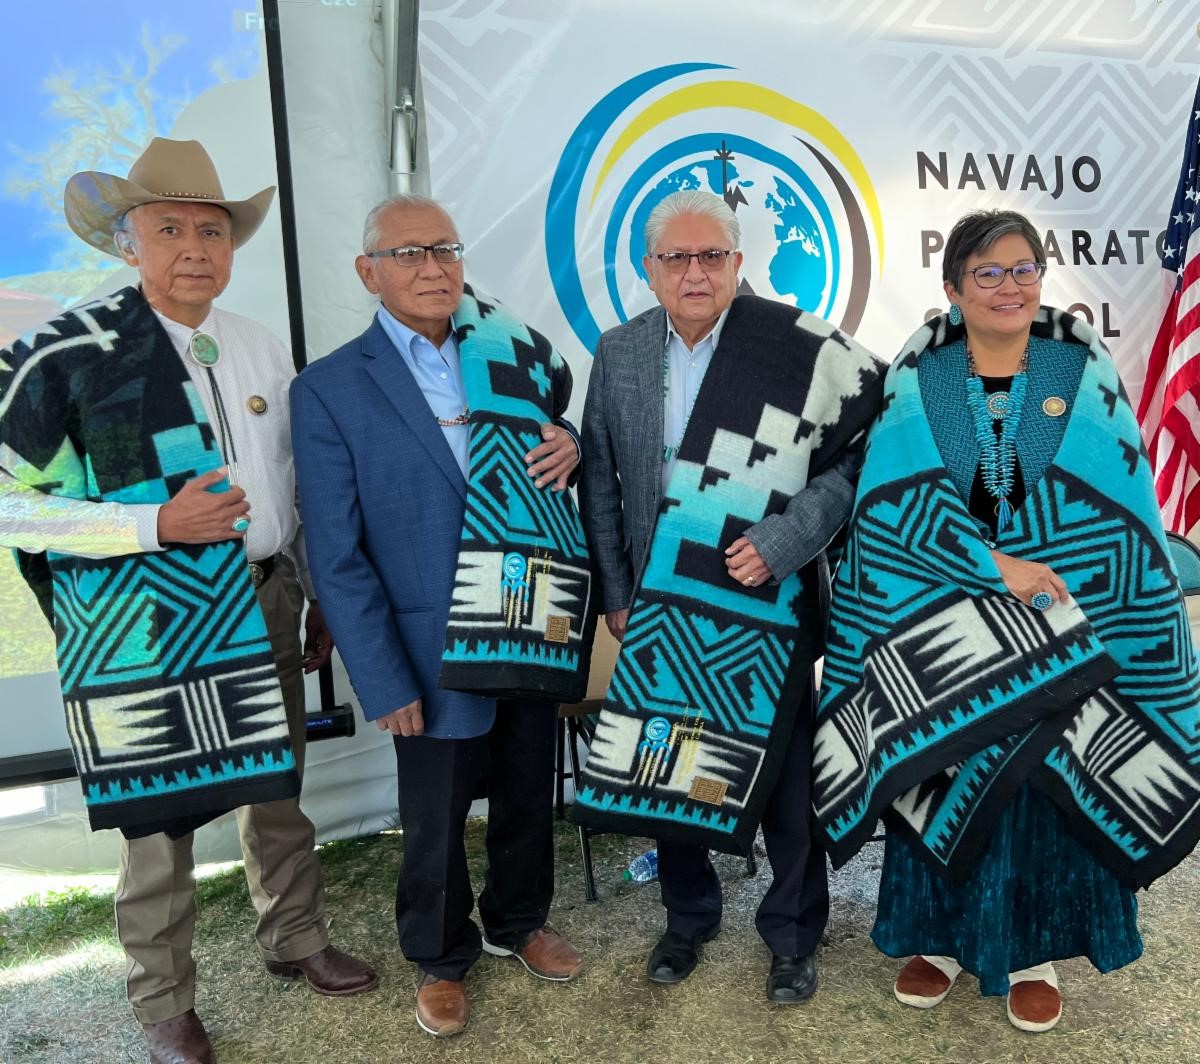 Navajo leaders celebrate 30 years at Navajo Prep School in Farmington